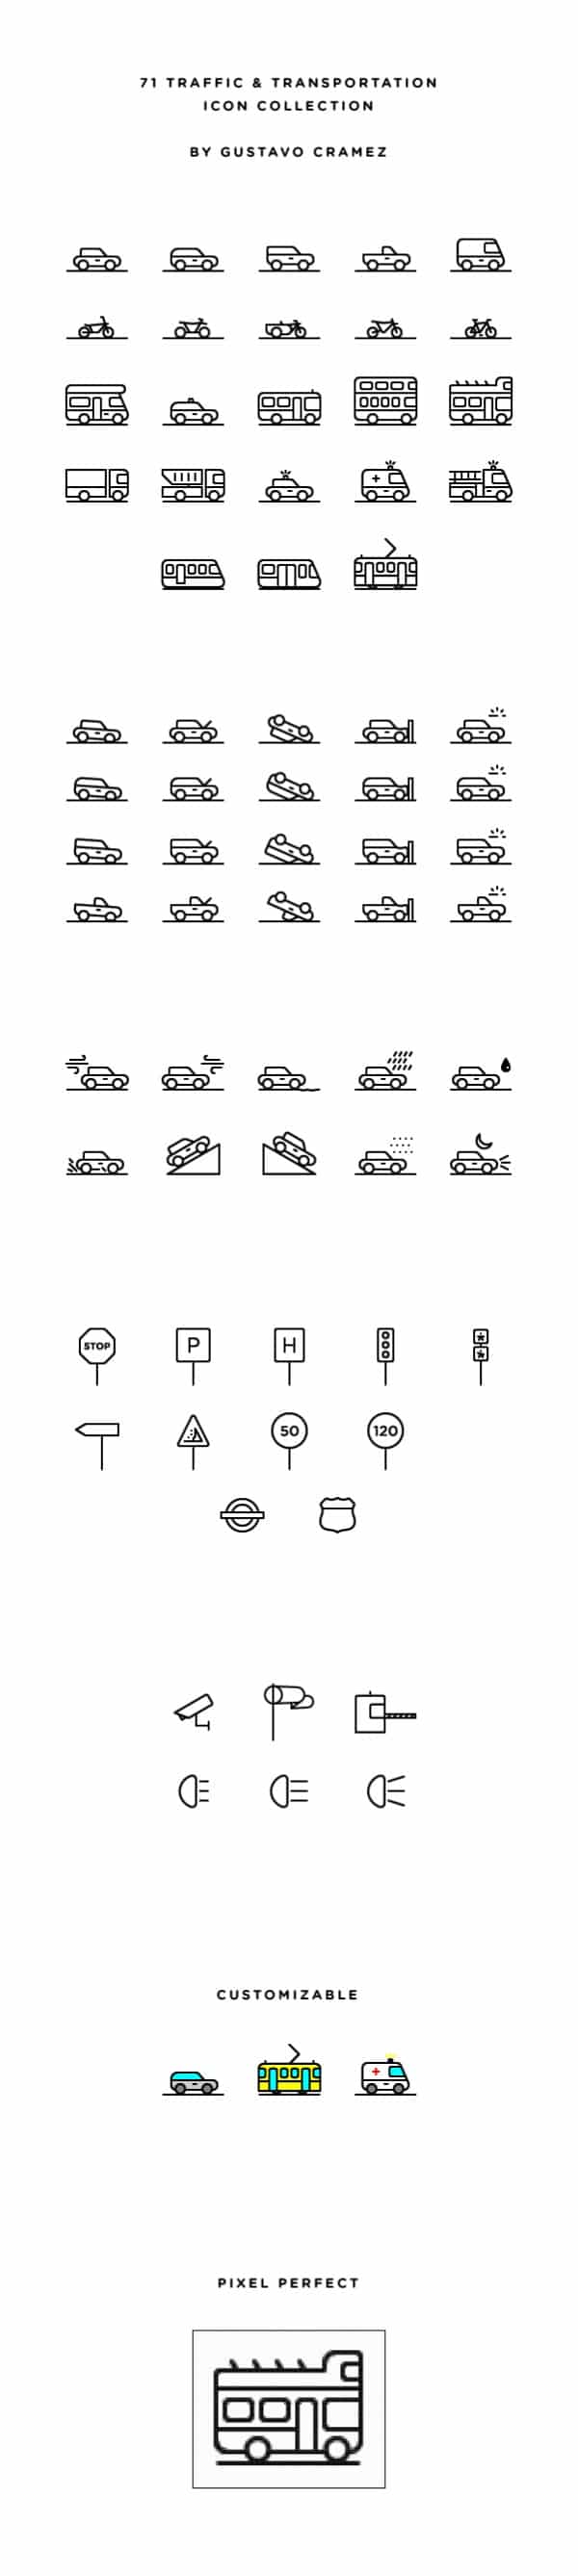 71-traffic-transportation-icons